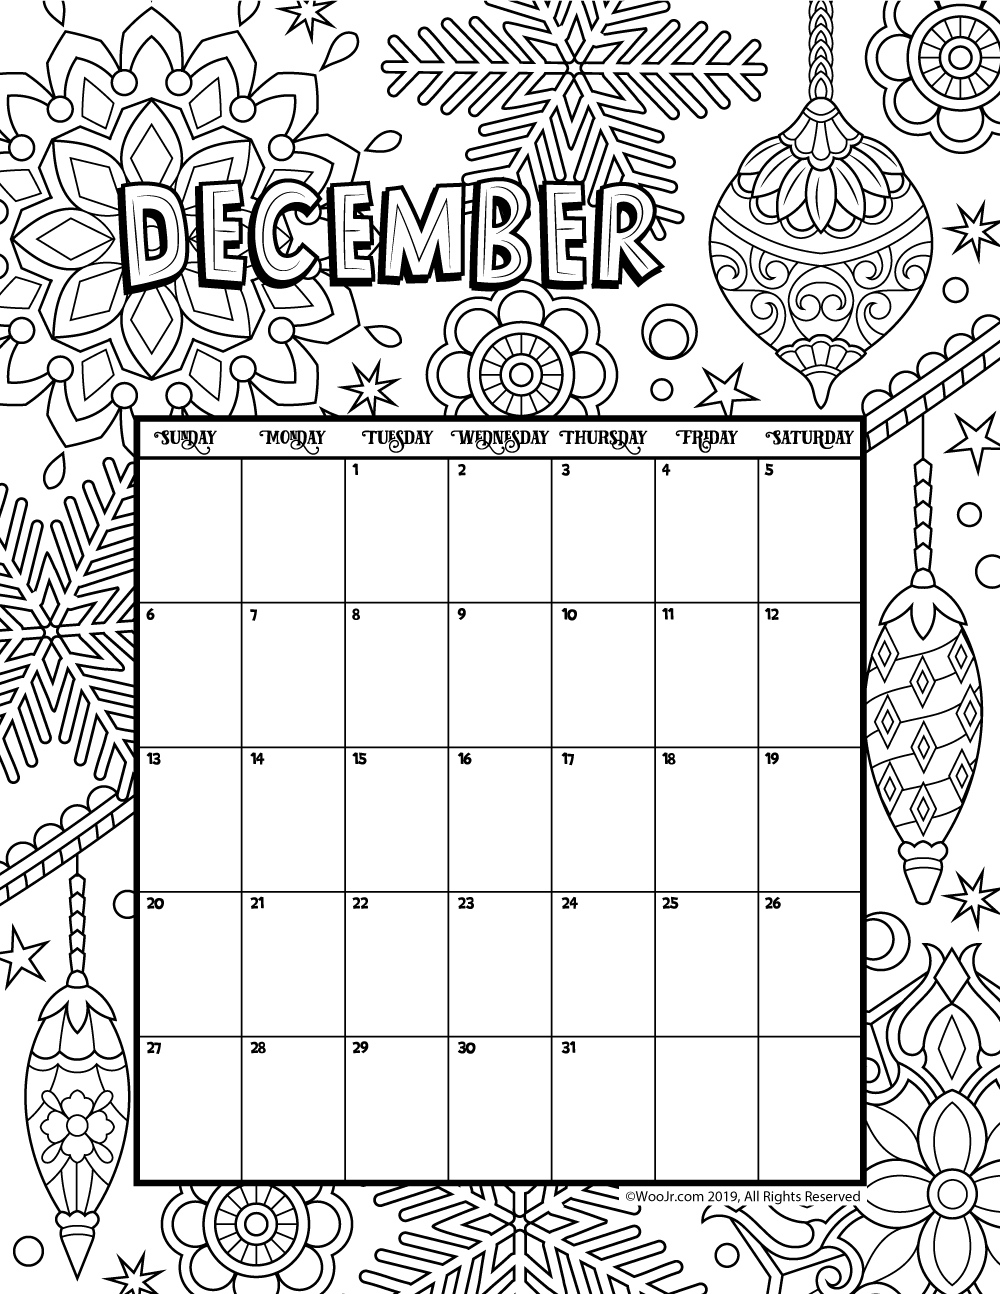 December 2020 Coloring Calendar | Woo! Jr. Kids Activities Perky Printable Christmas Activity Calendar 2020